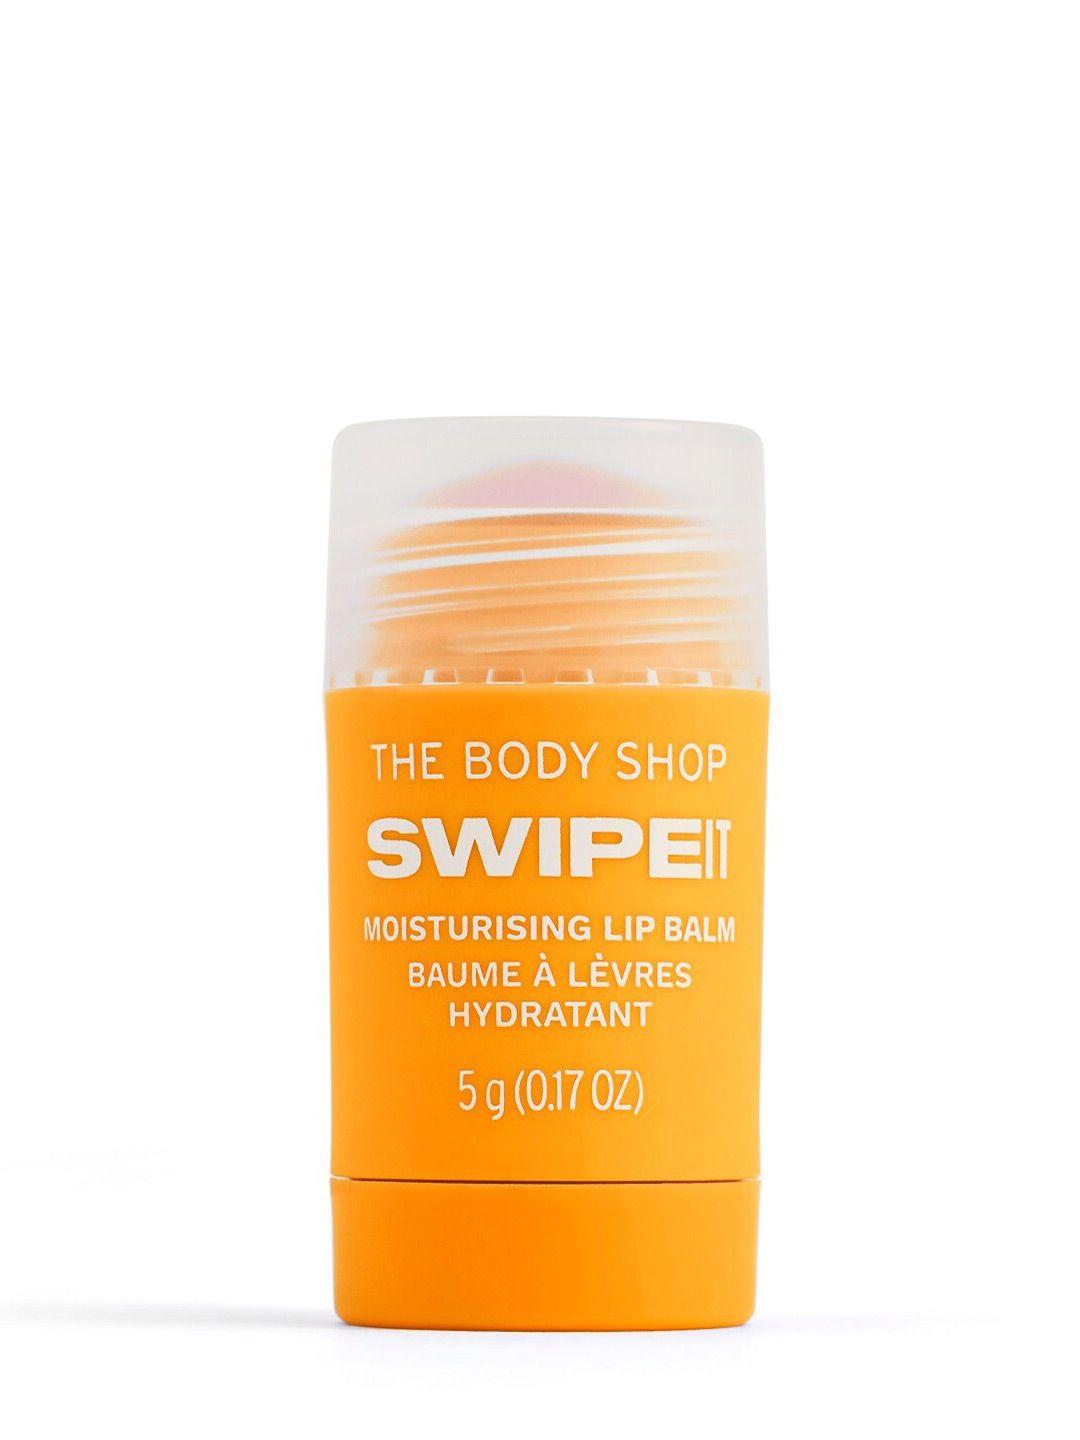 the body shop swipe it moisturizing lip balm 5g - pasion fruit